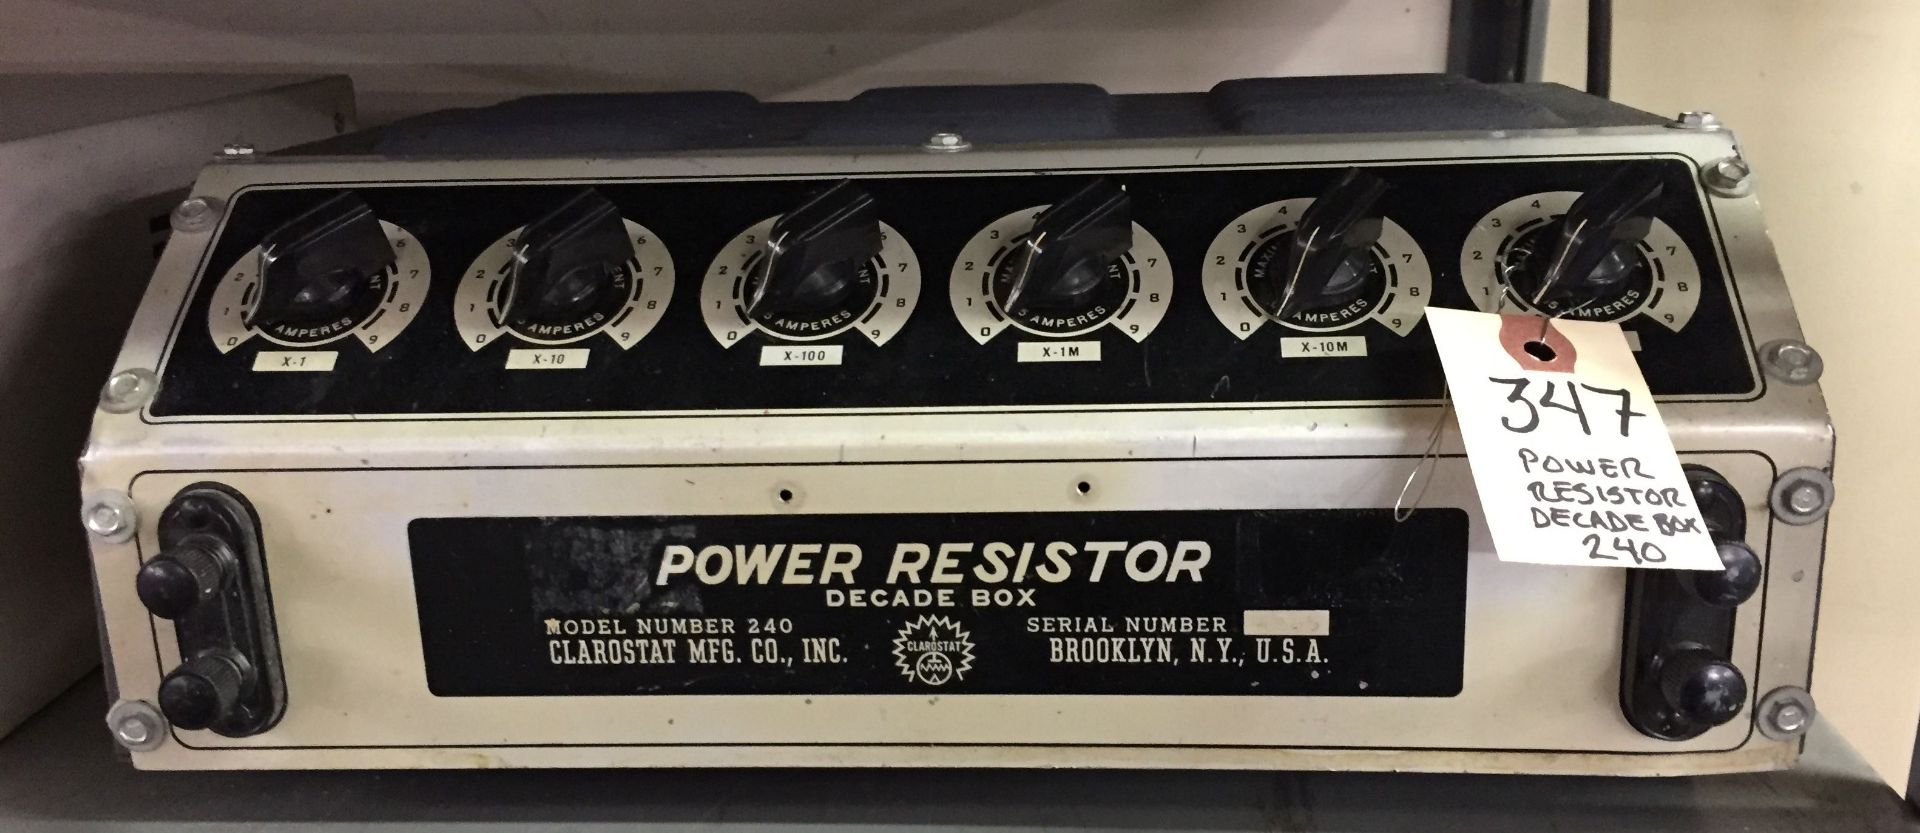 Clarostat 240 Power Resistor Decade Box